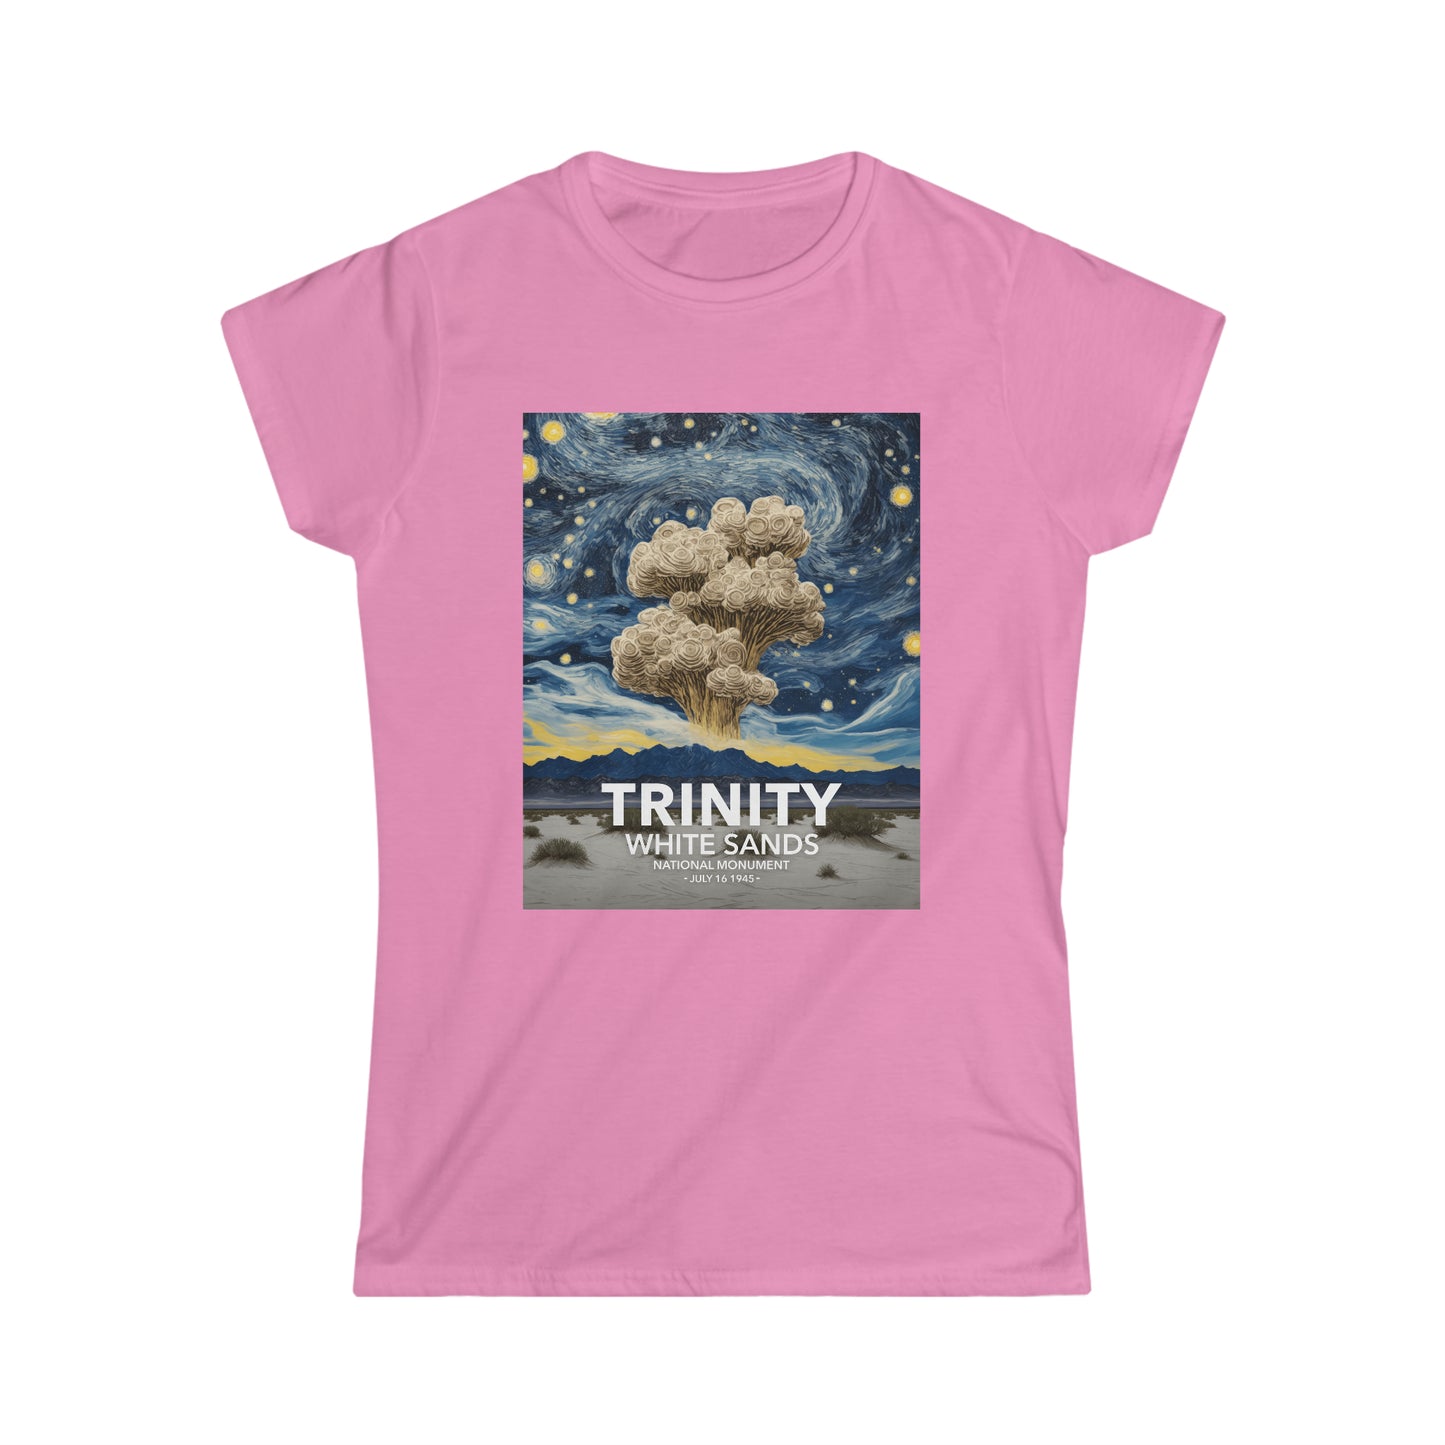 White Sands National Park T-Shirt - Women's Starry Night Trinity Test